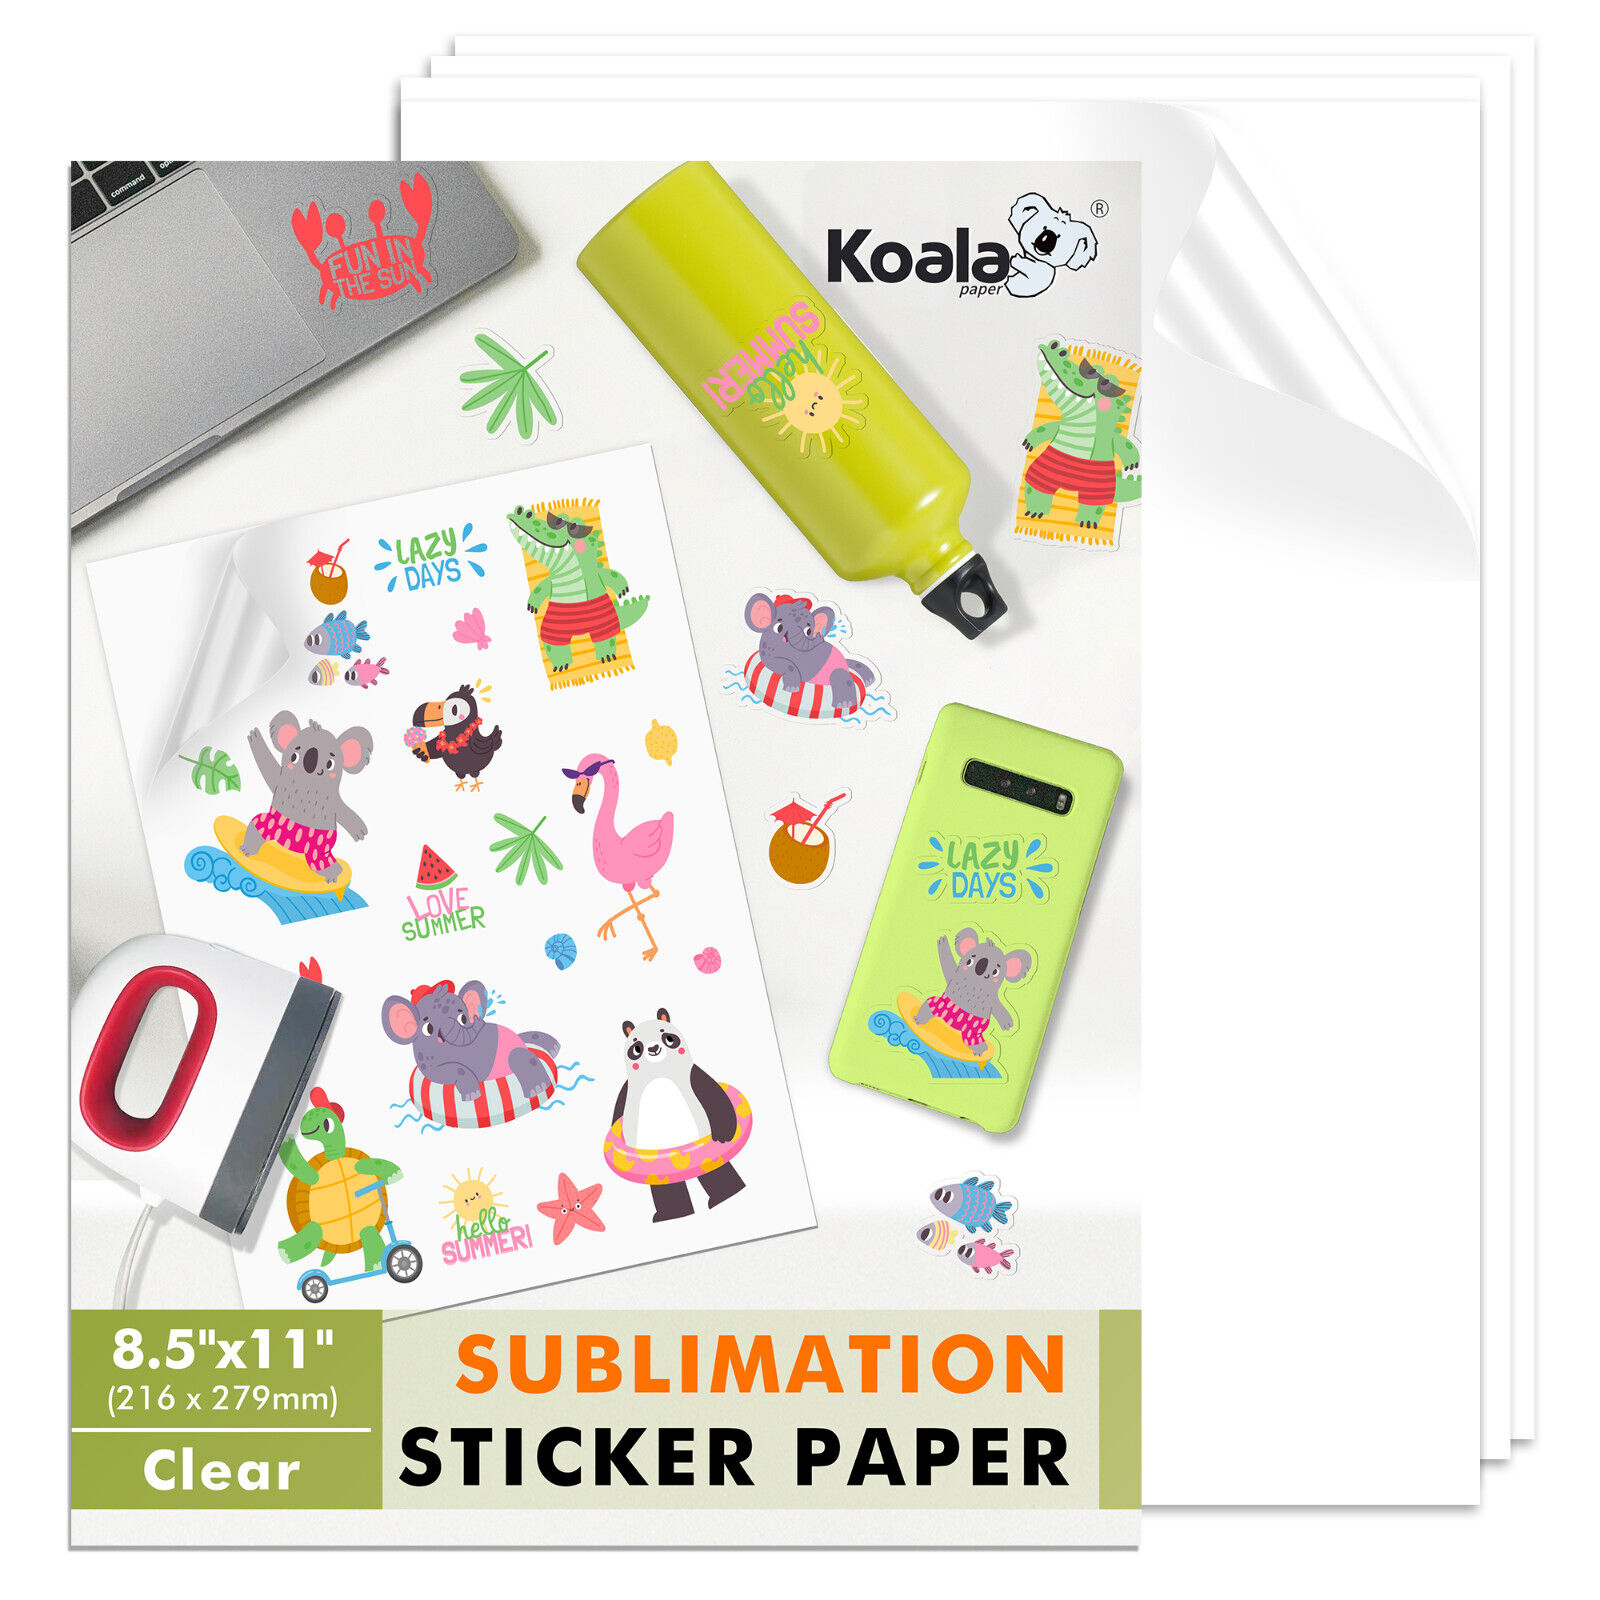 Koala Sublimation Sticker Paper Clear Matte / Koala Sublimation Paper and Ink